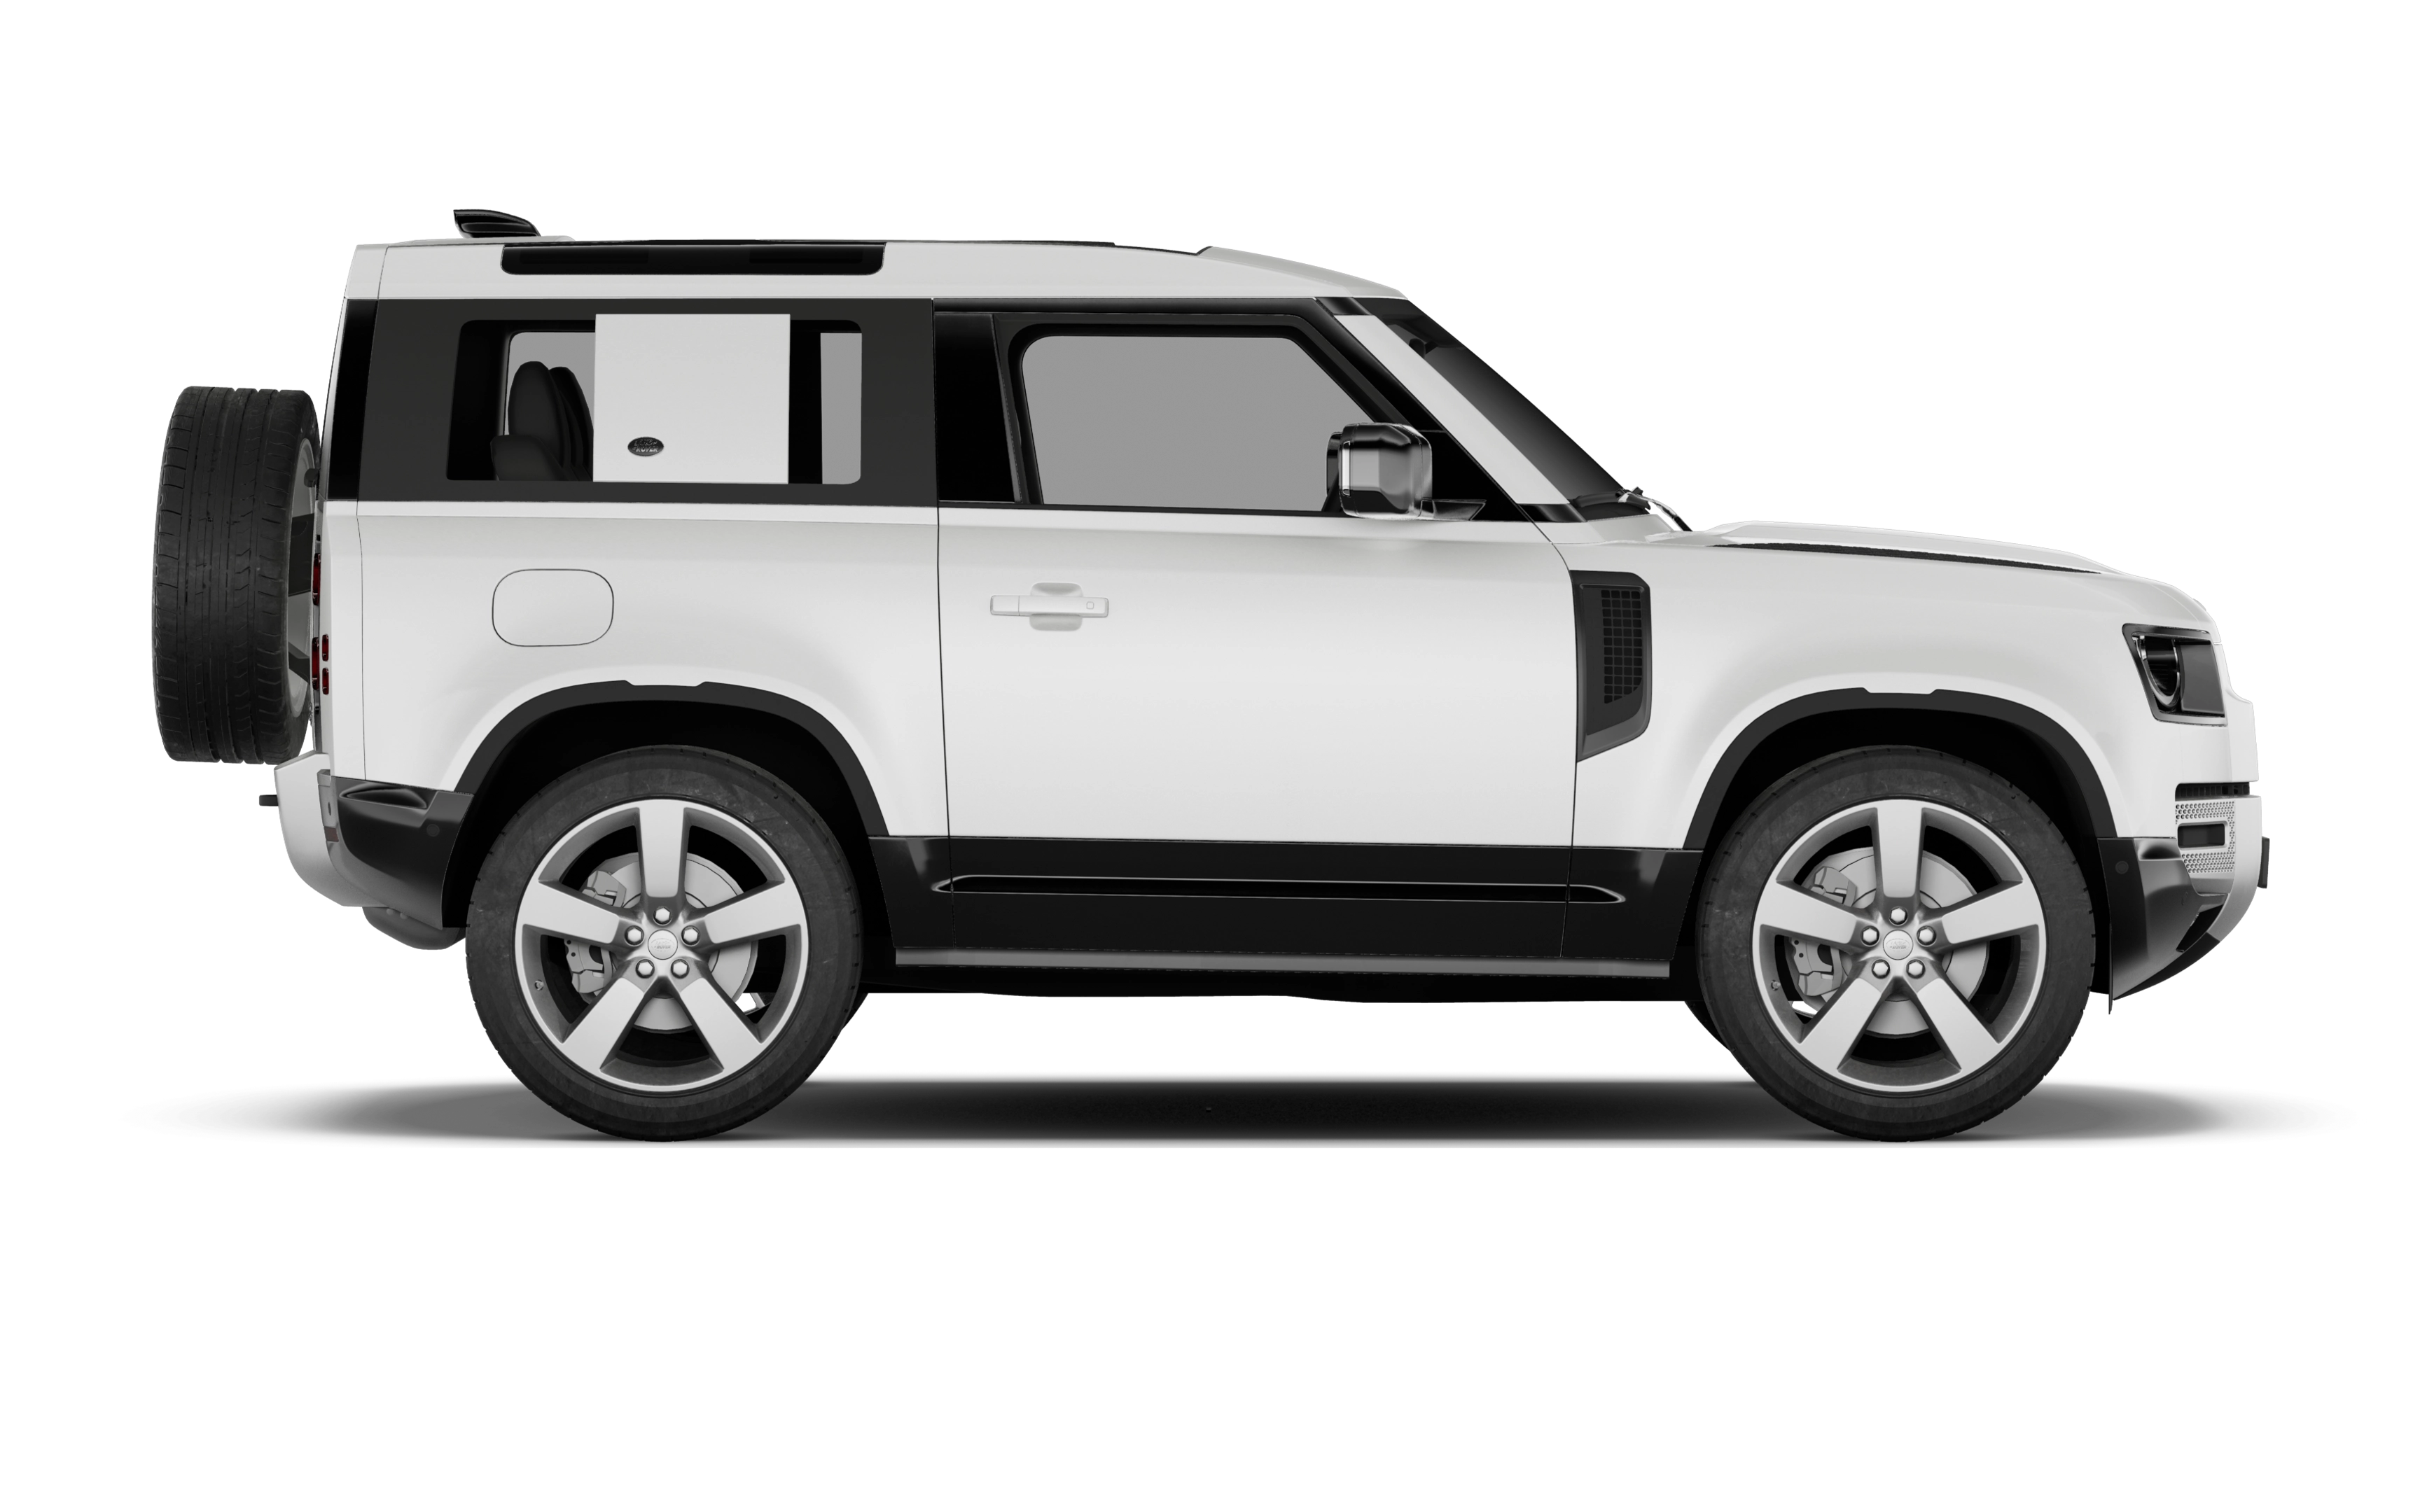 Land rover defender estate 3.0 d300 hse 110 5 doors auto [6 seat]